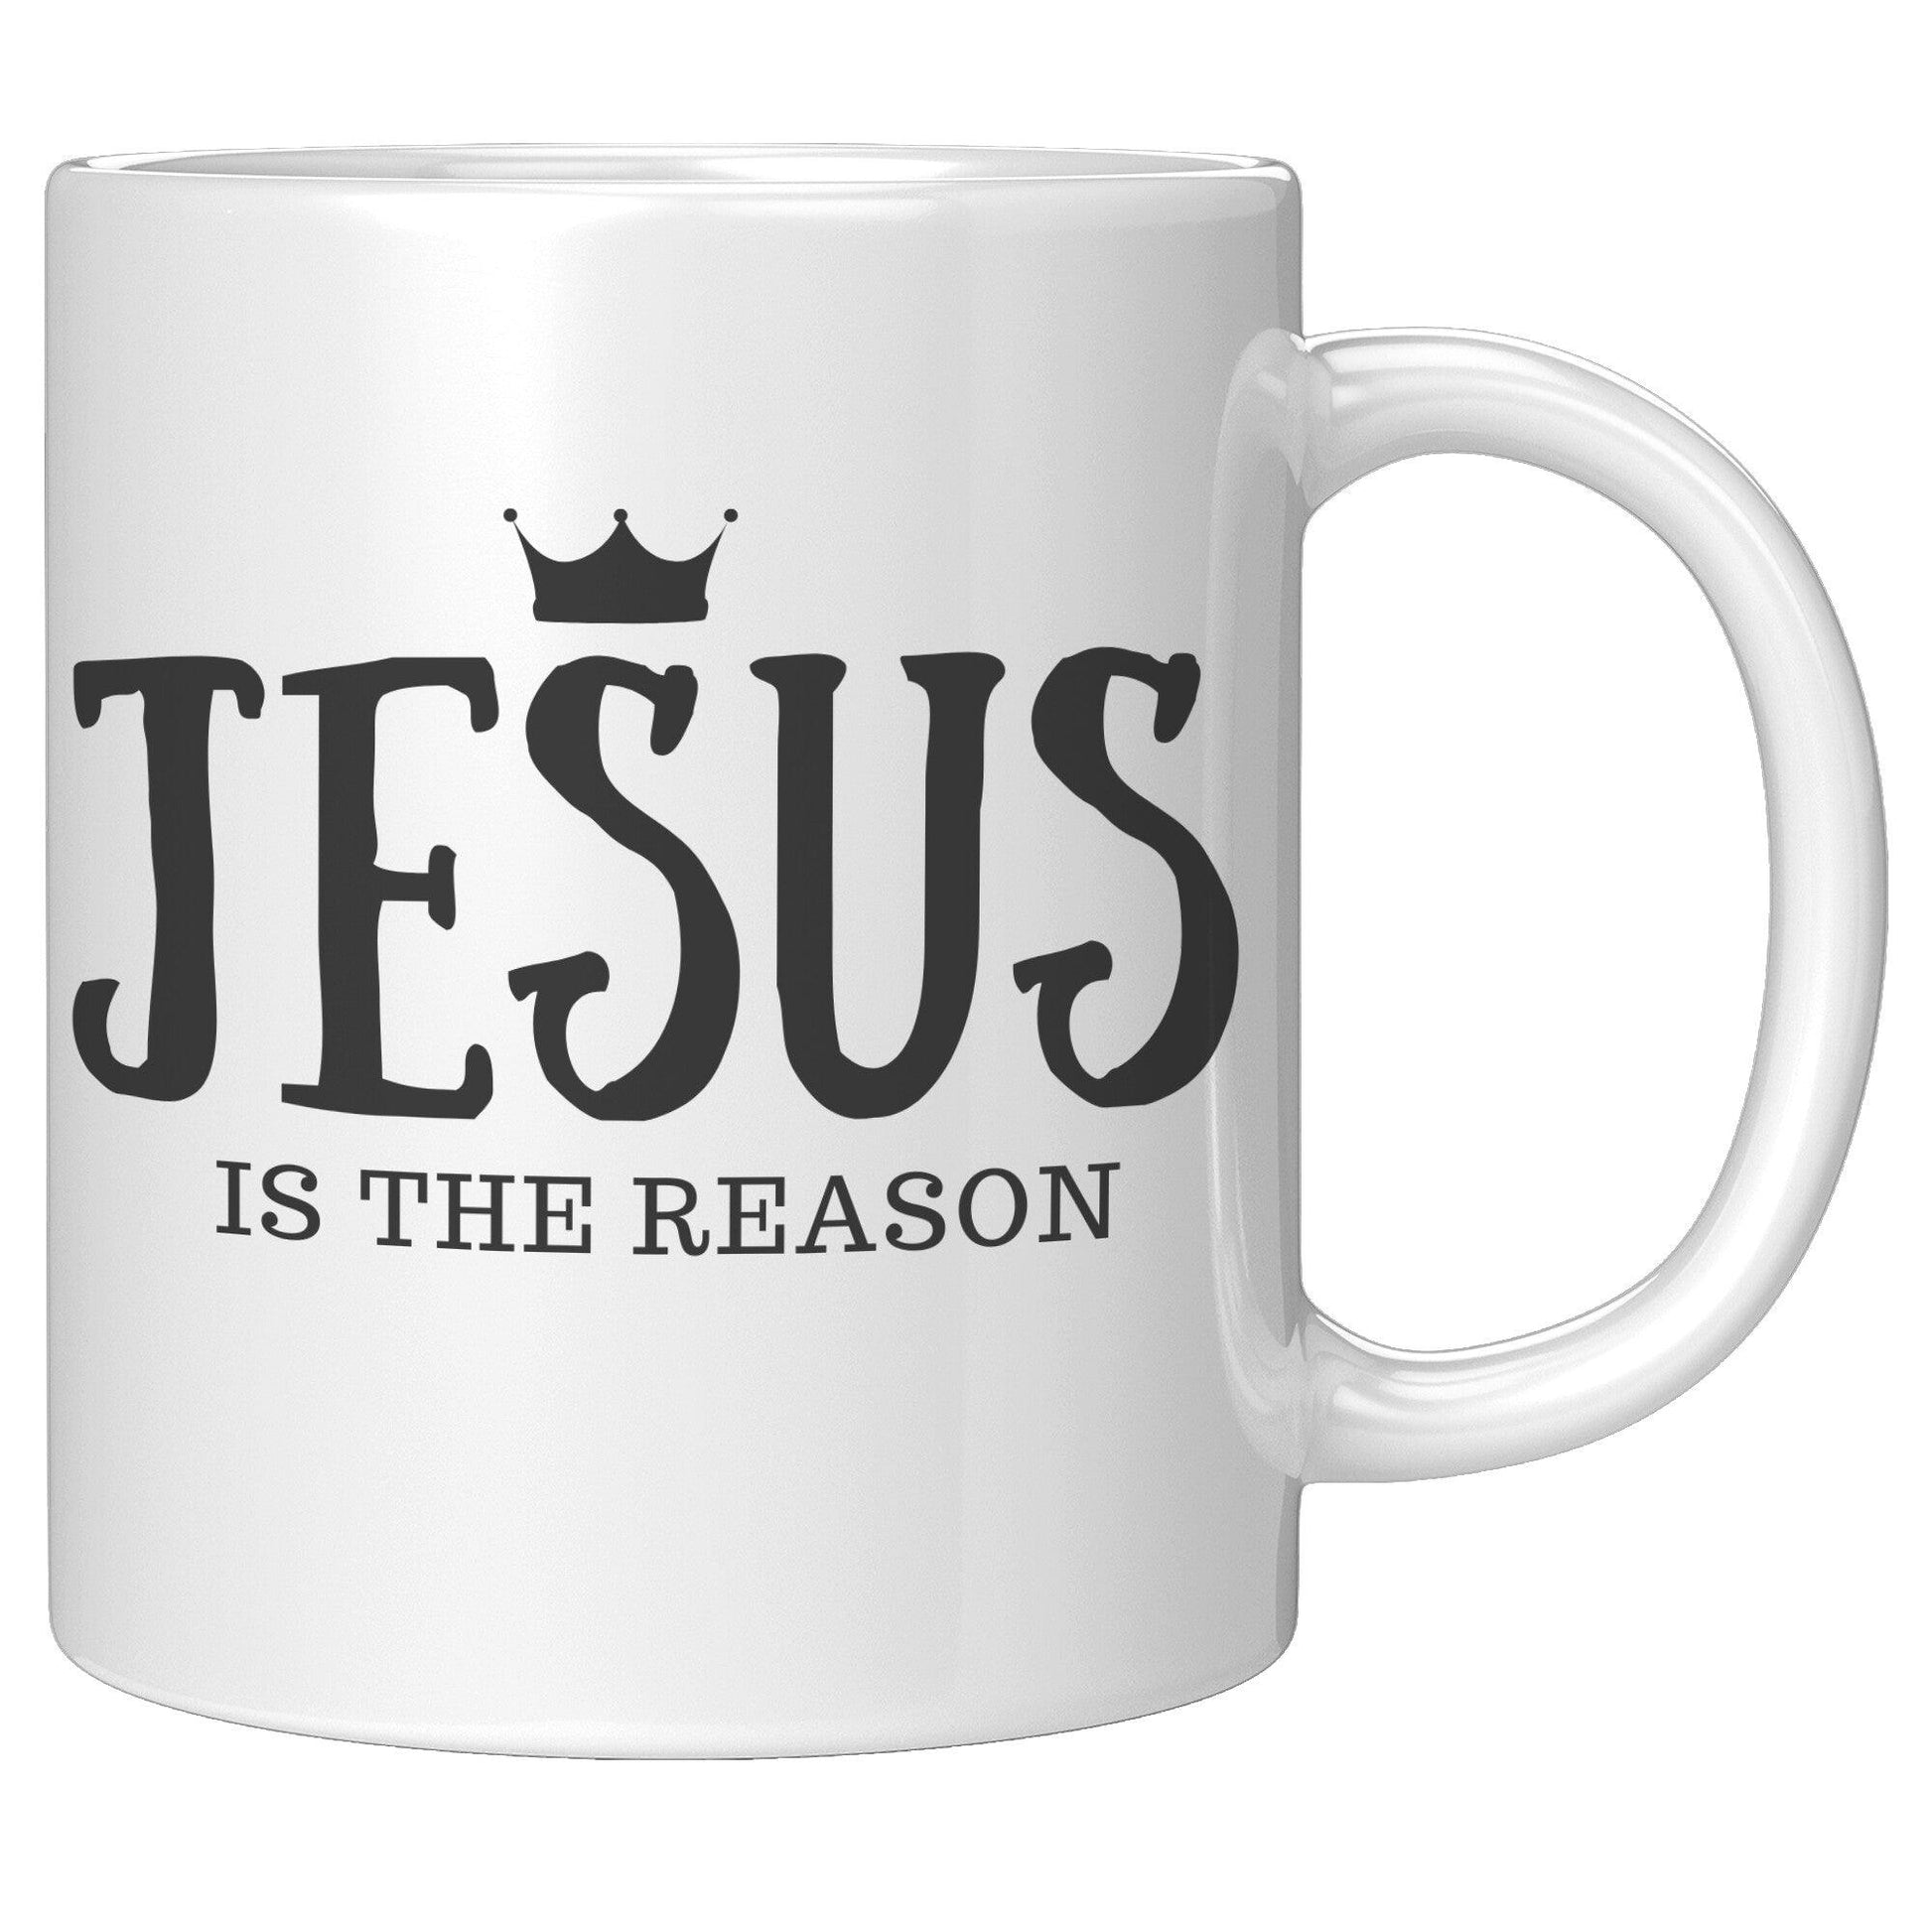 Jesus Is The Reason White Mug - TheGivenGet